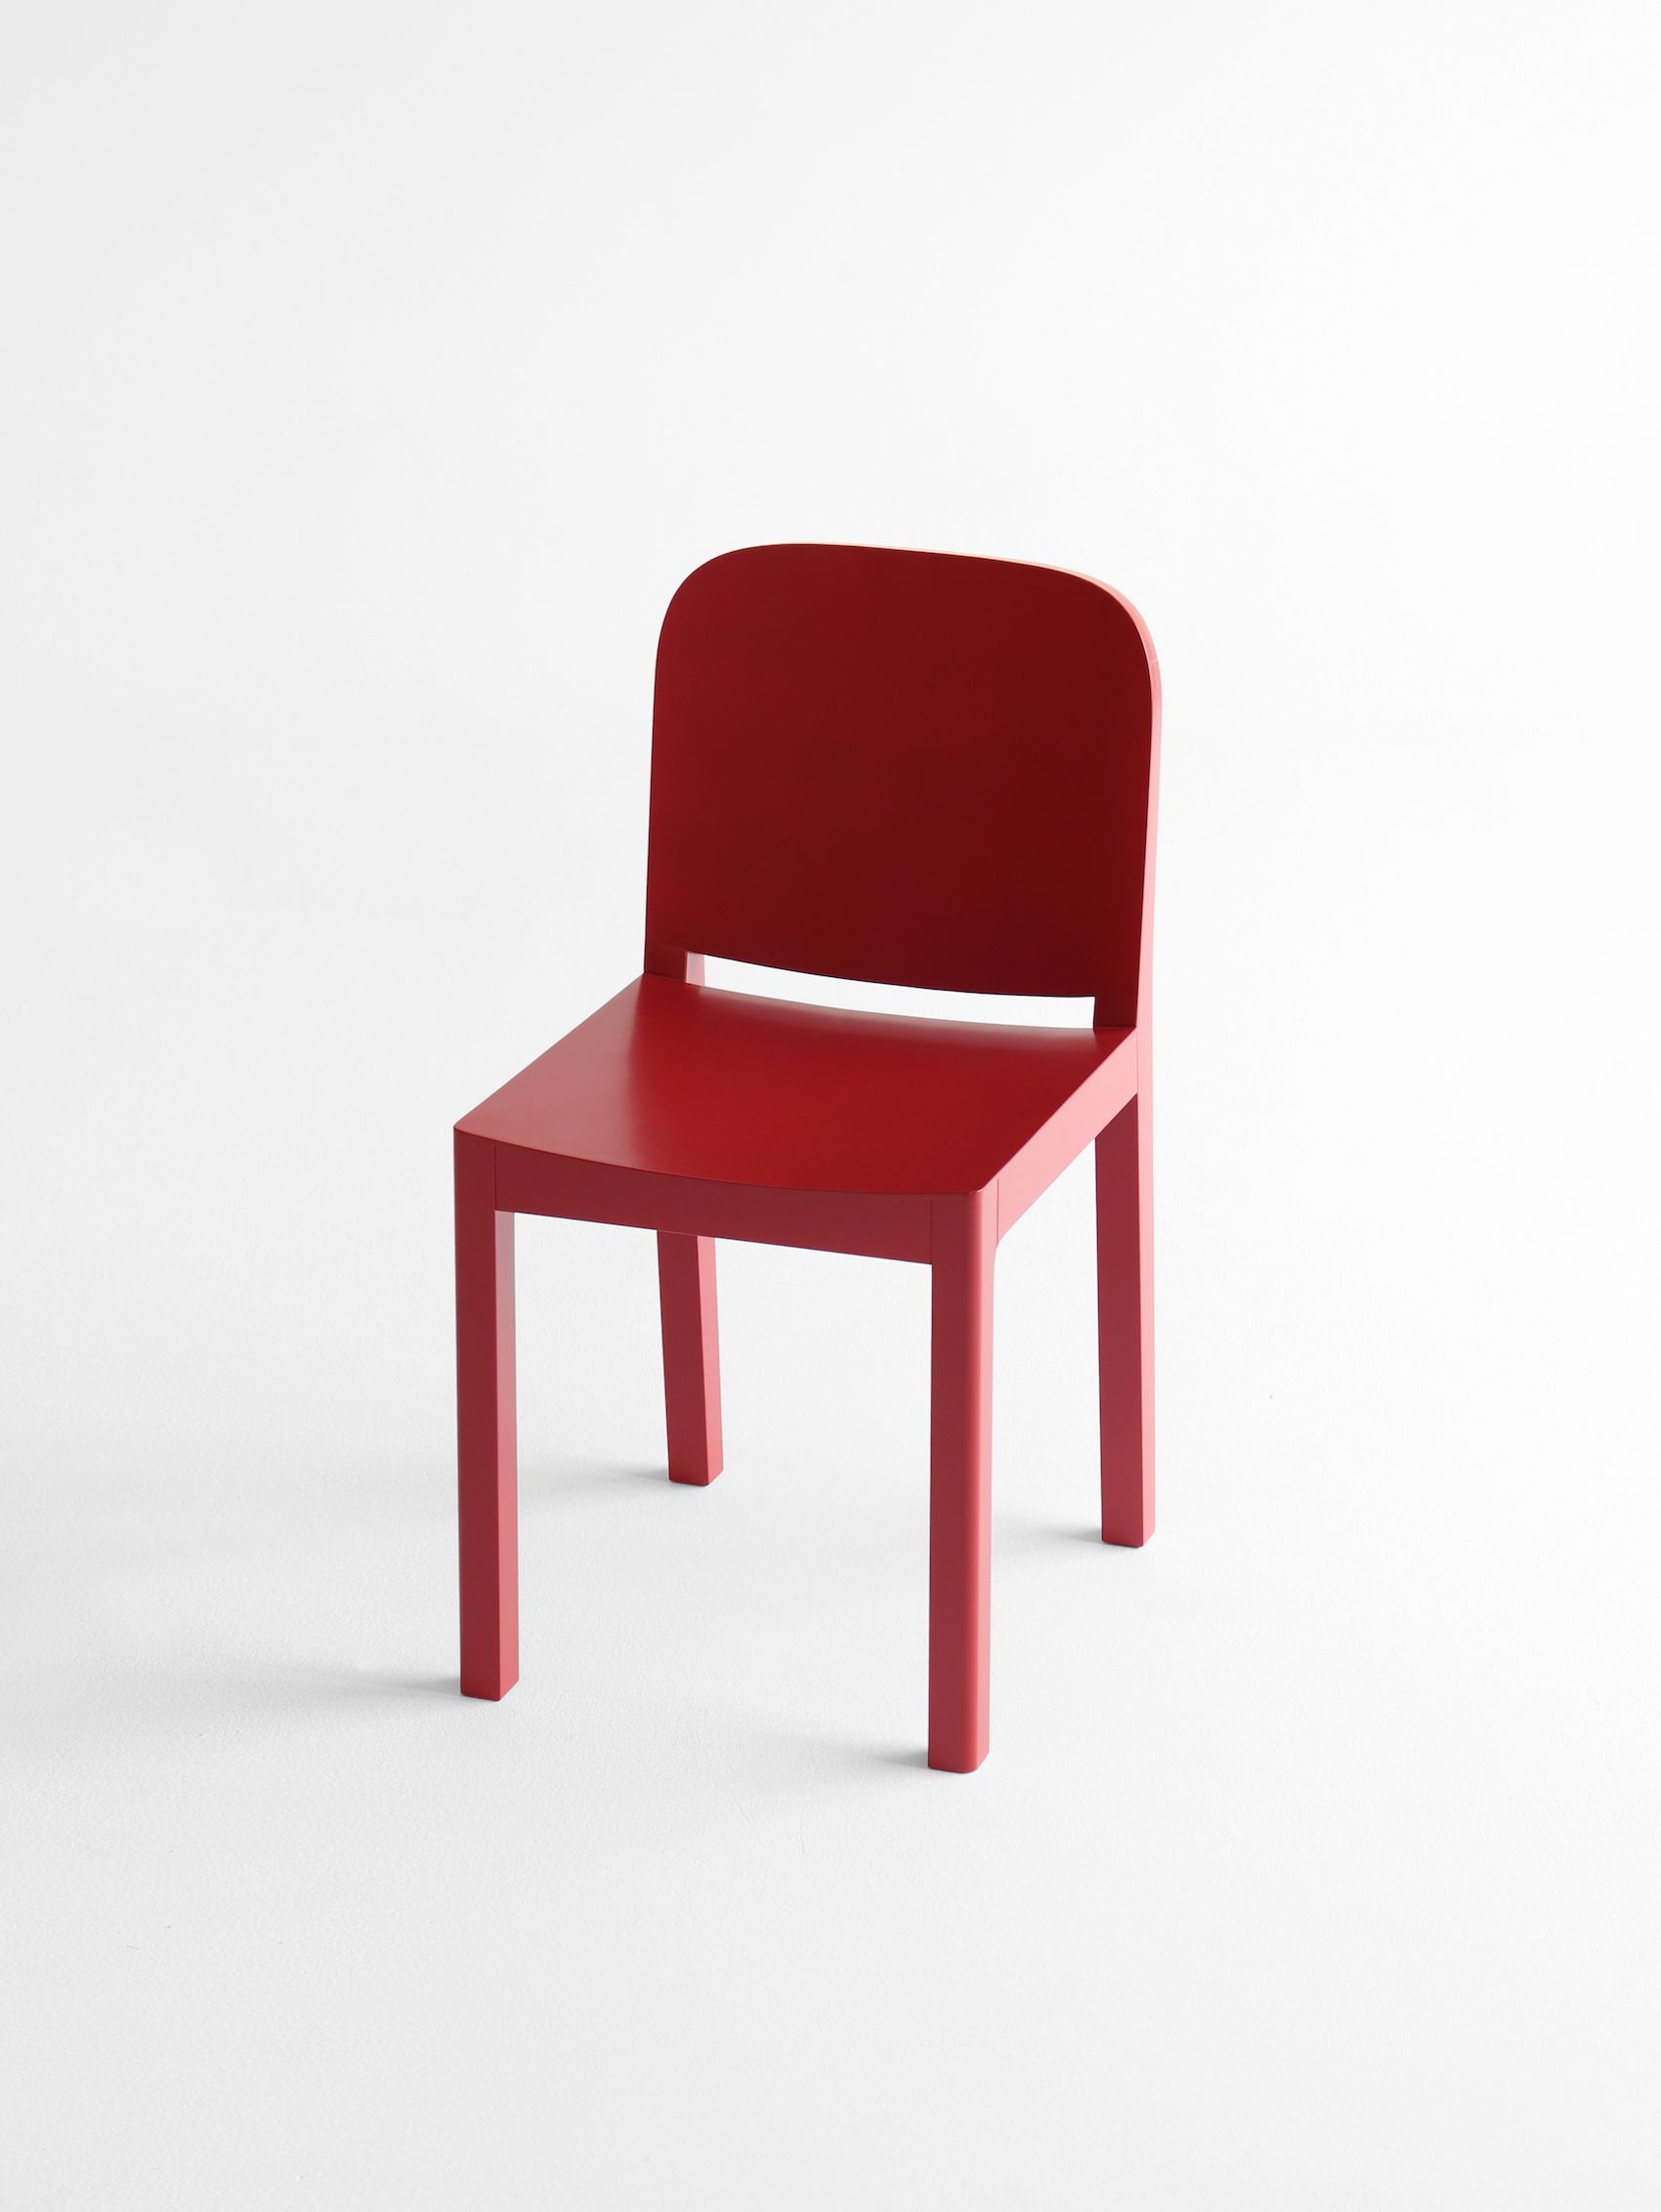 Gyeol Chair by Jungmo Yang